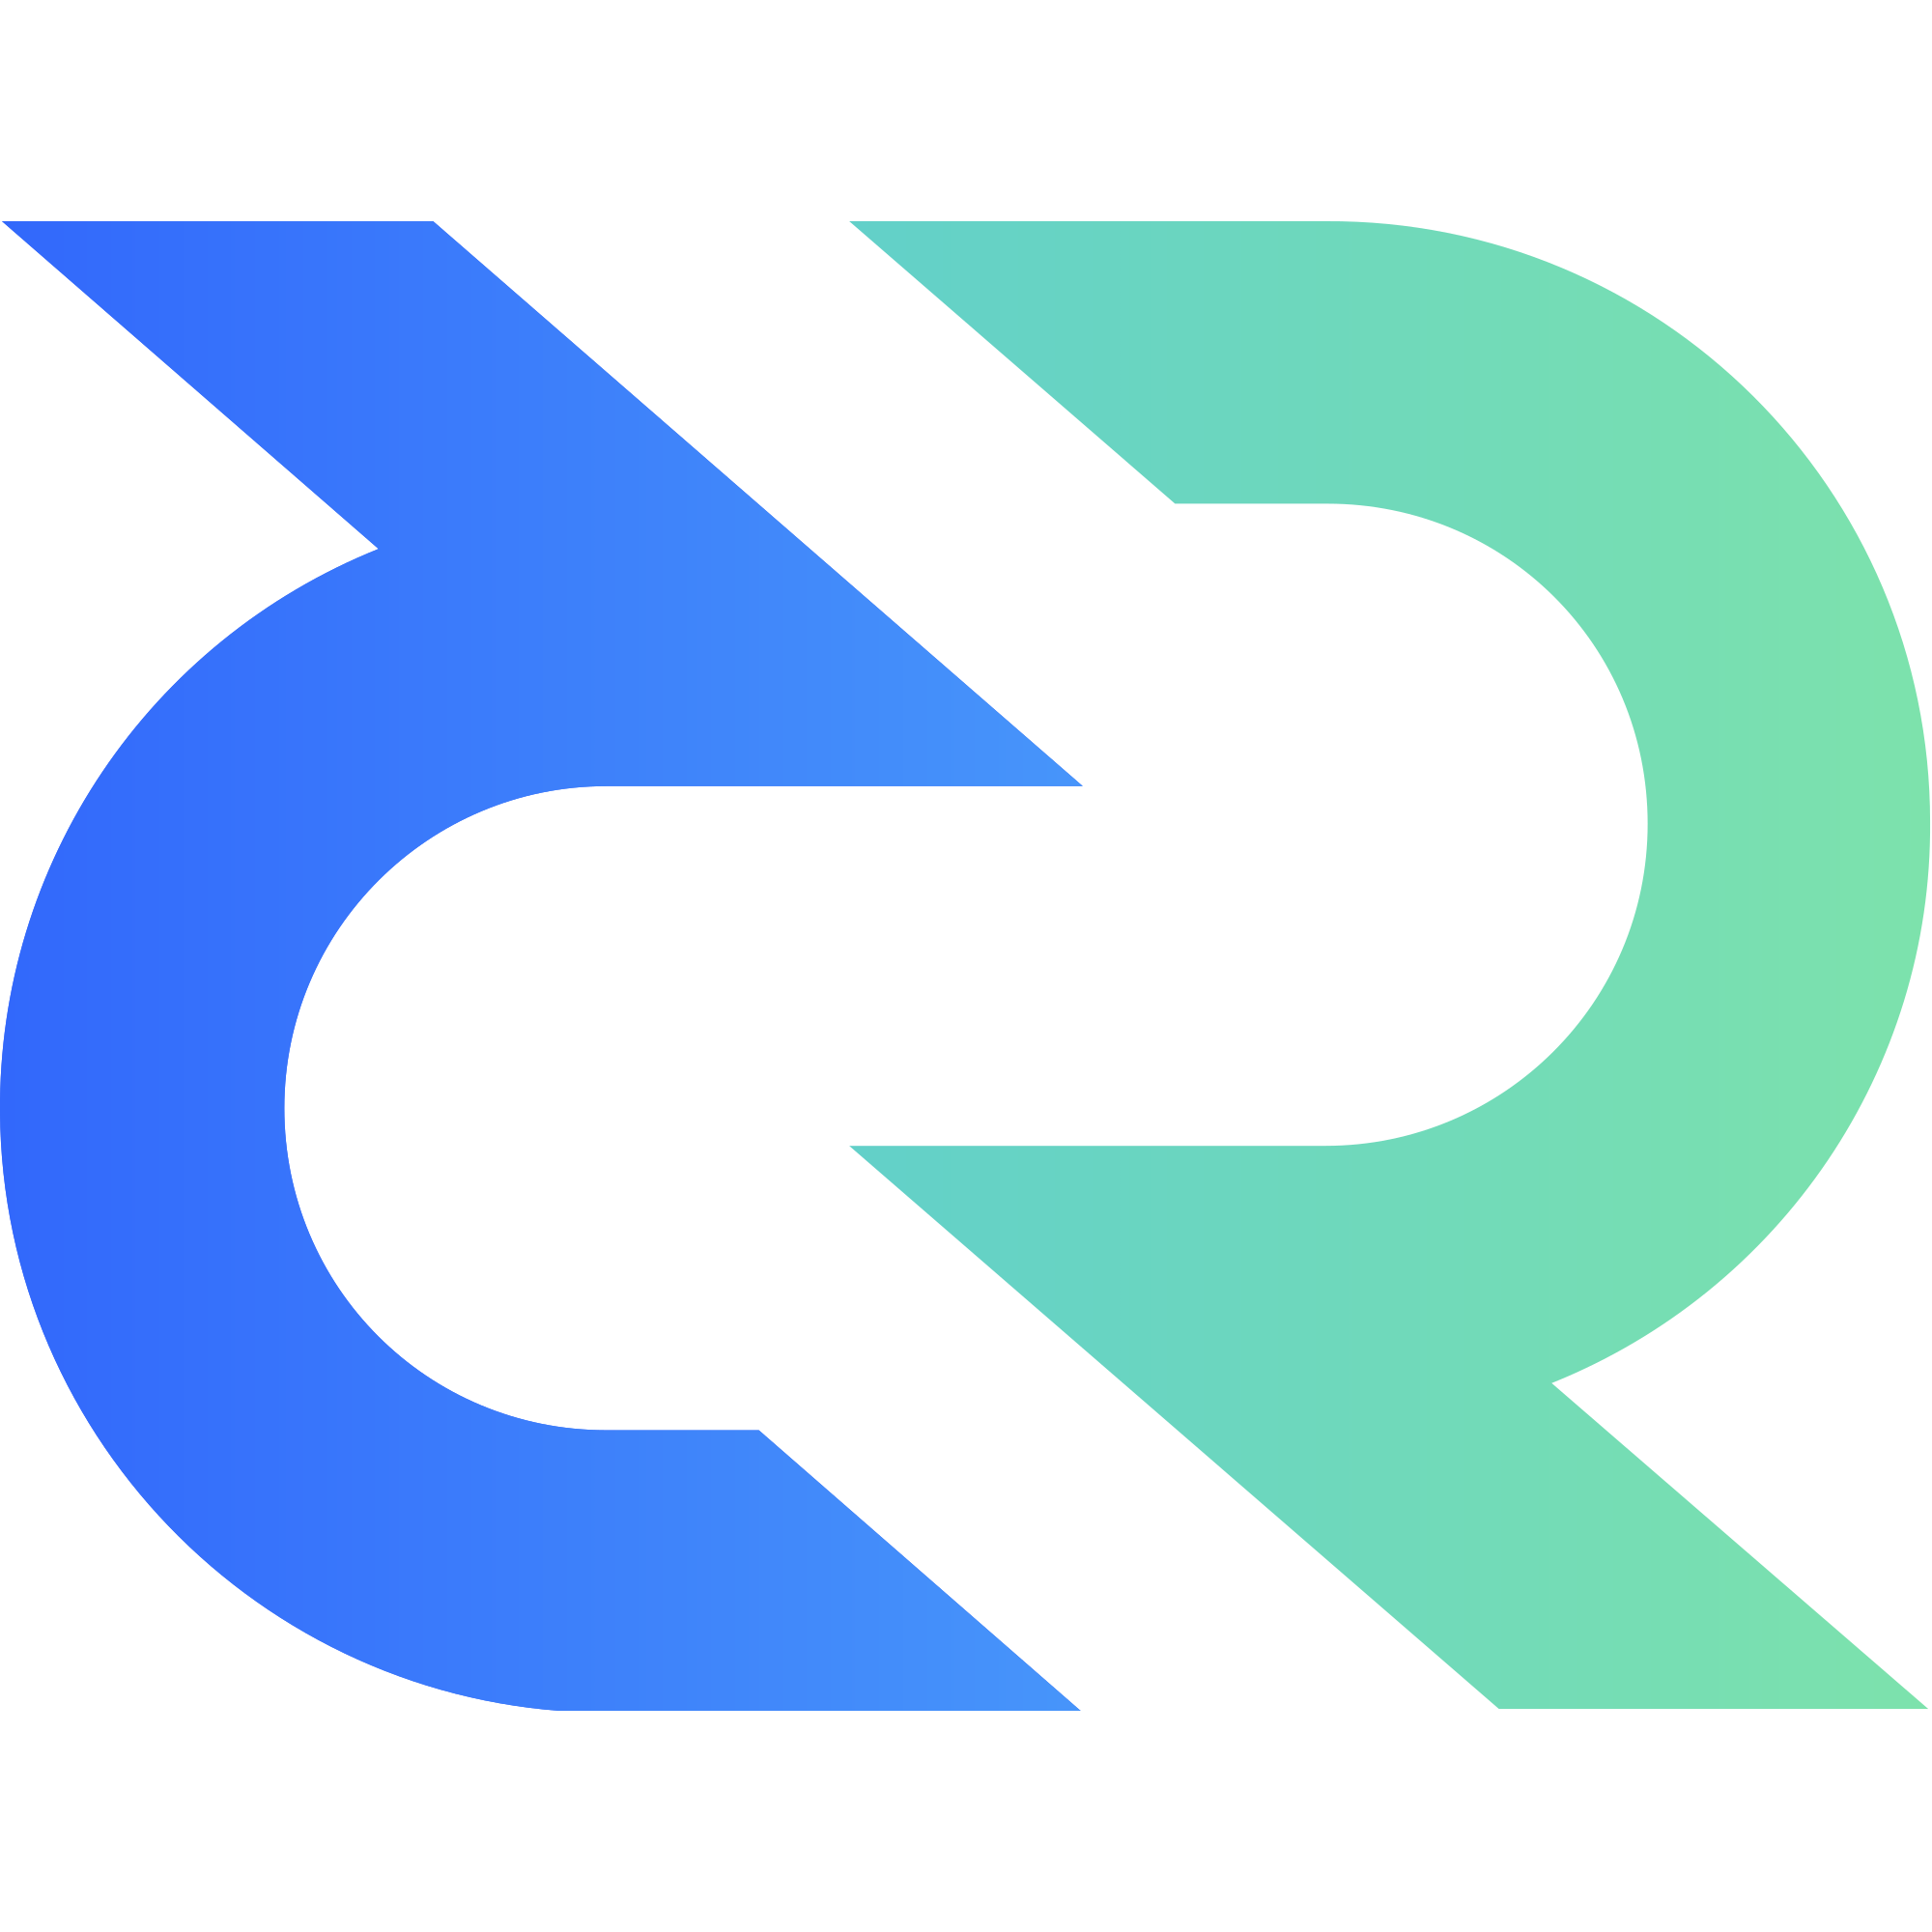 Decred (DCR) Logo .SVG and .PNG Files Download